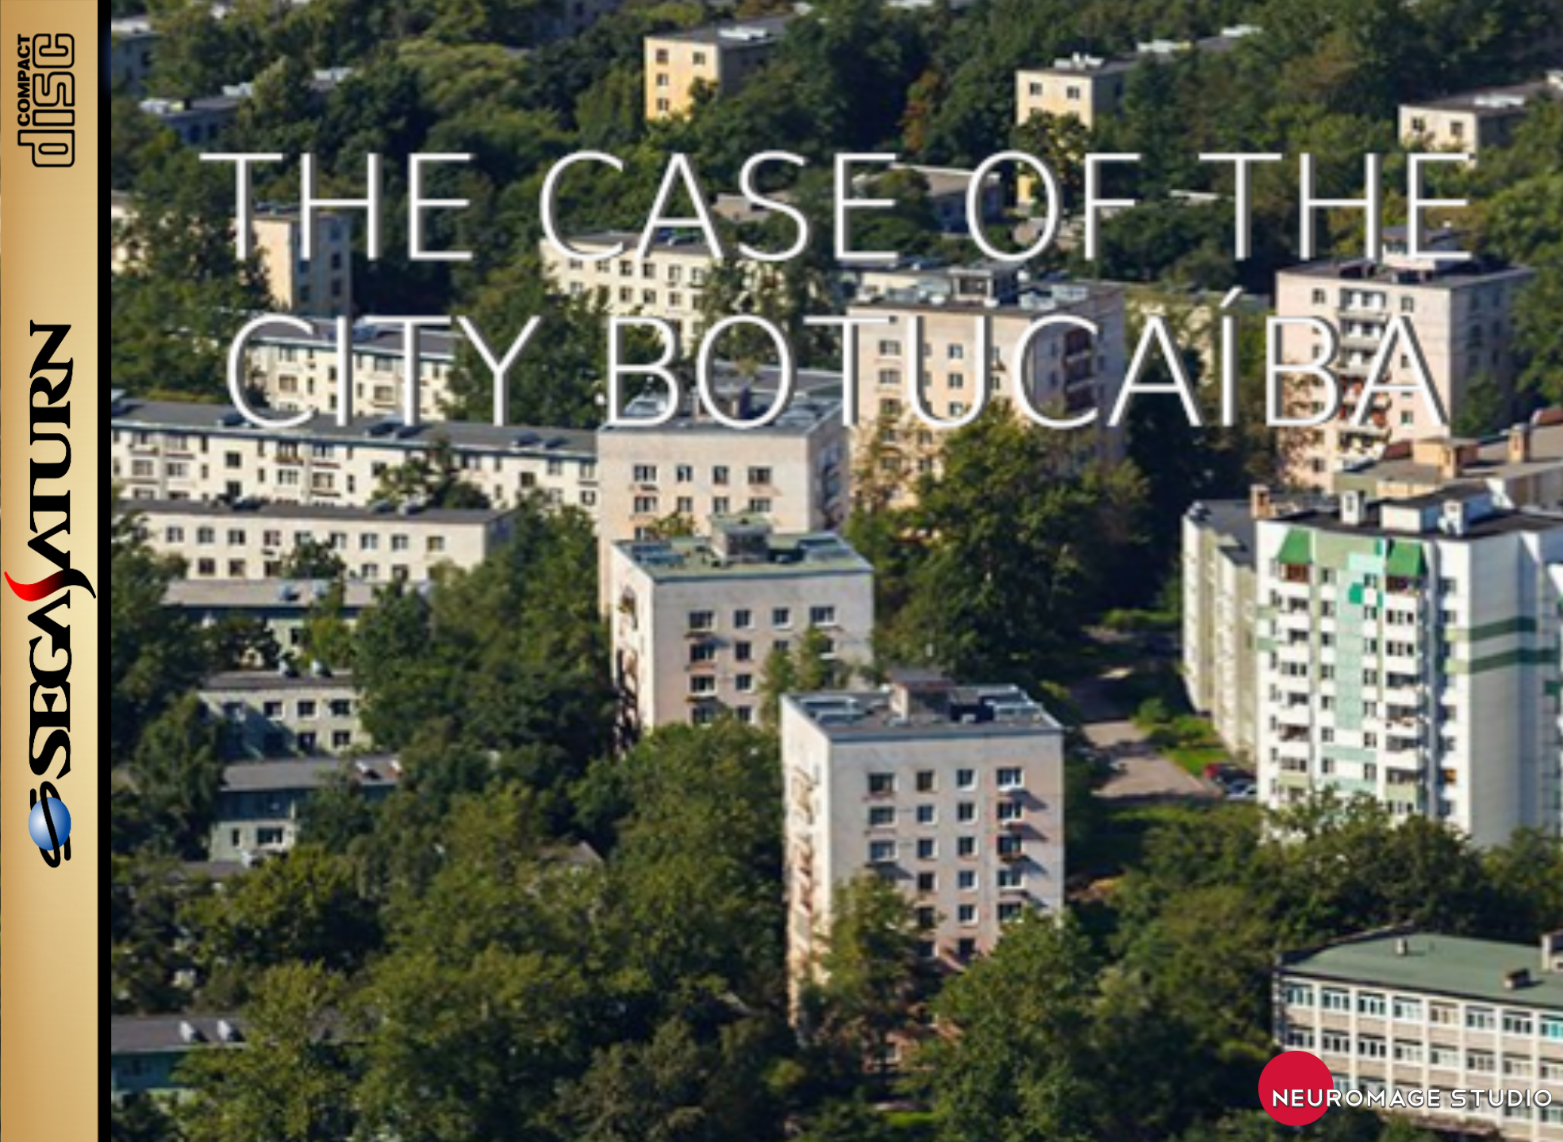 The Case of the City Botucaiba